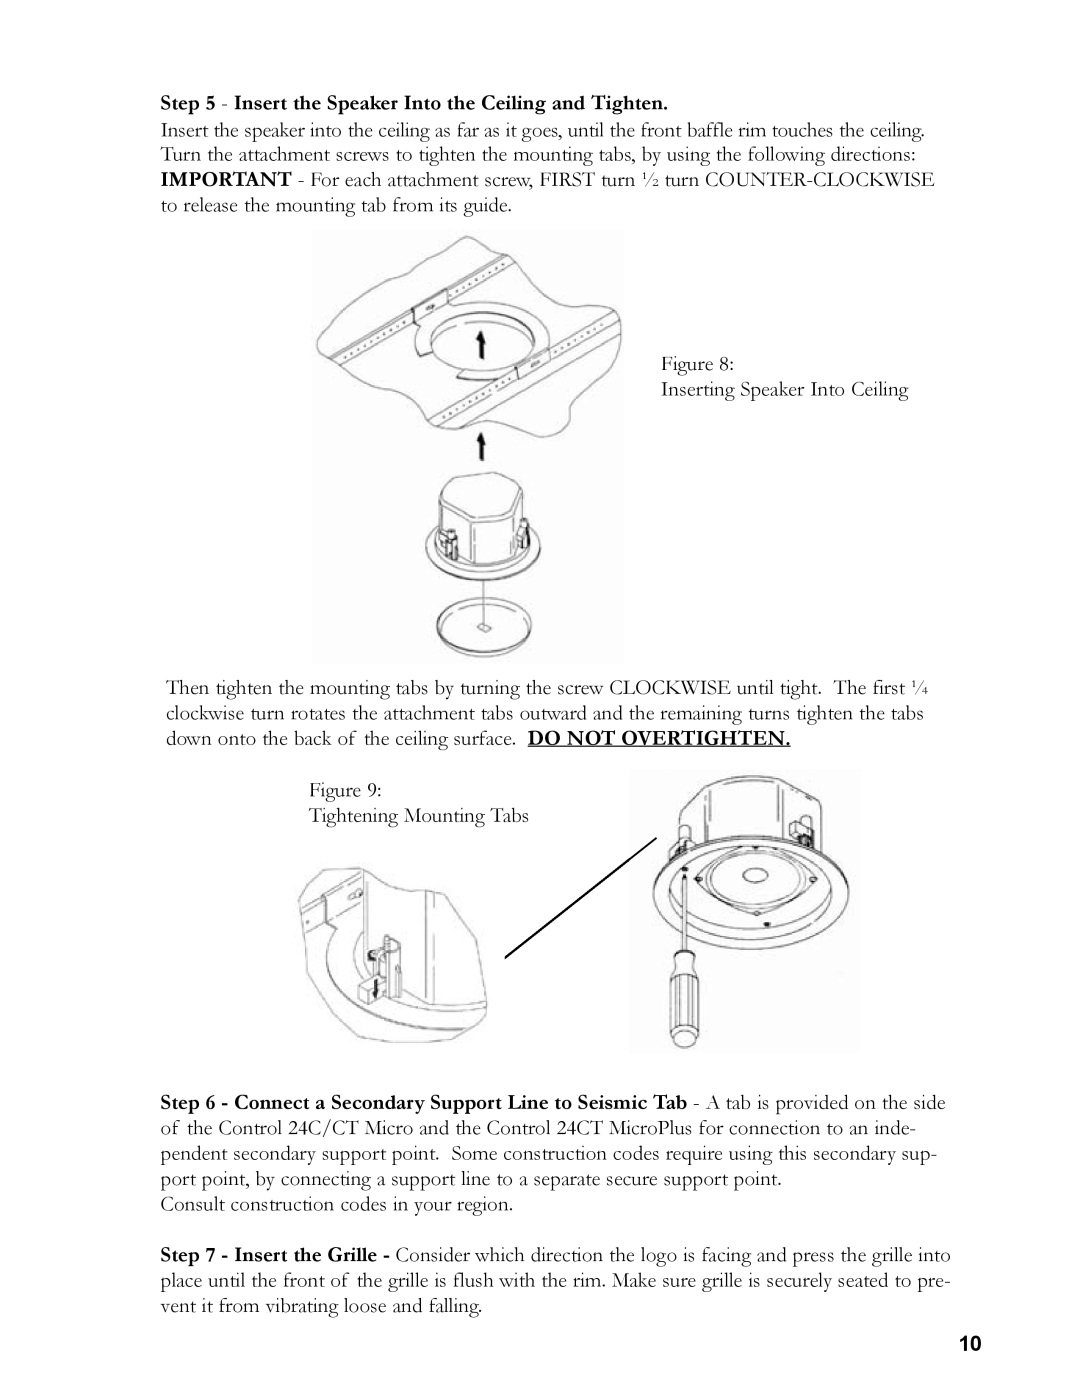 JBL 24C/CT owner manual Figure Inserting Speaker Into Ceiling 